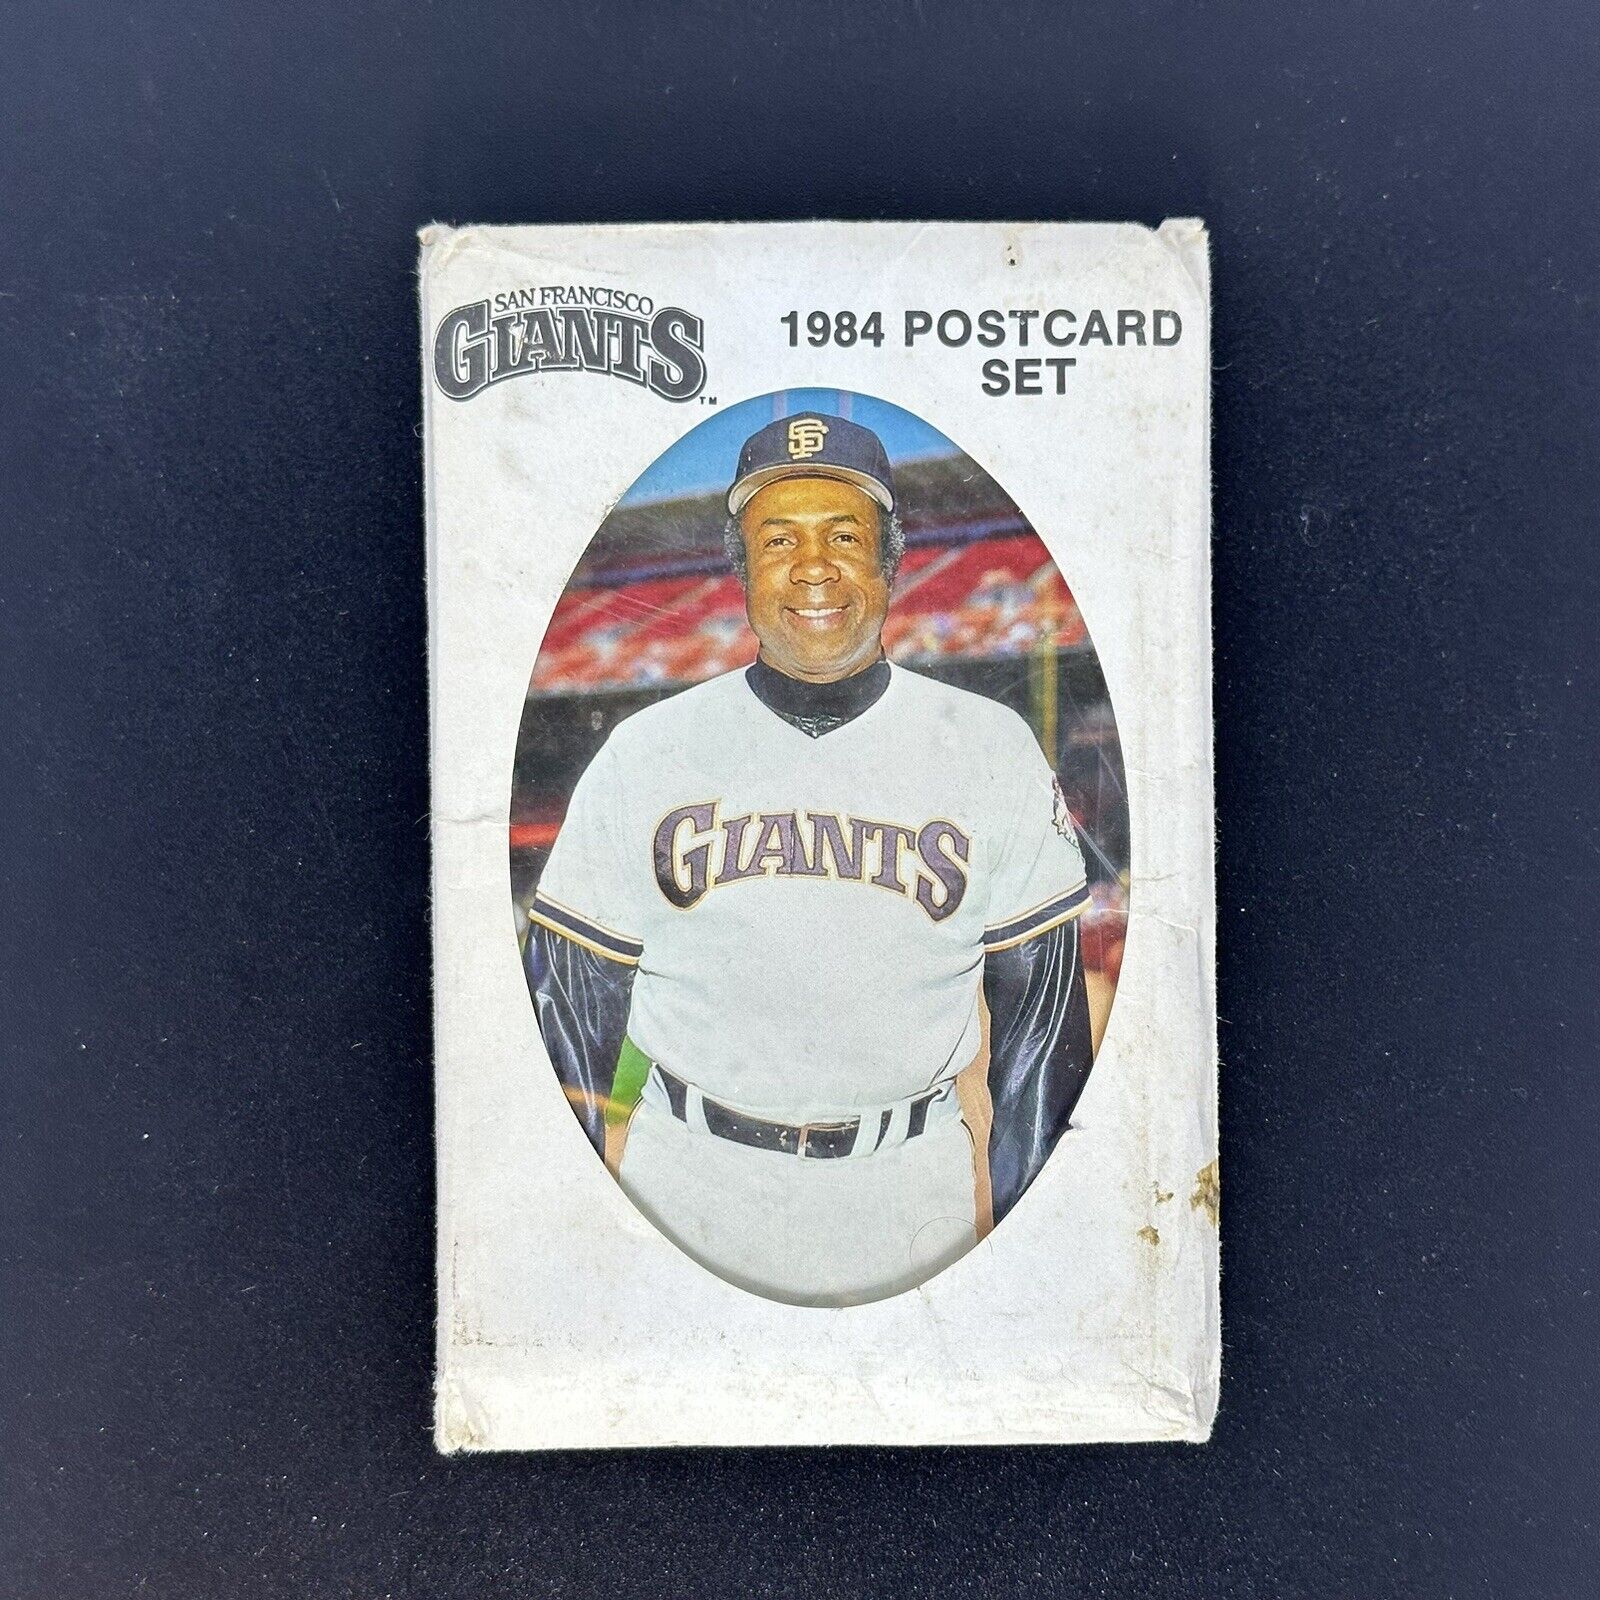 1984 San Francisco Giants Baseball 31 Postcard Set in Original Envelope